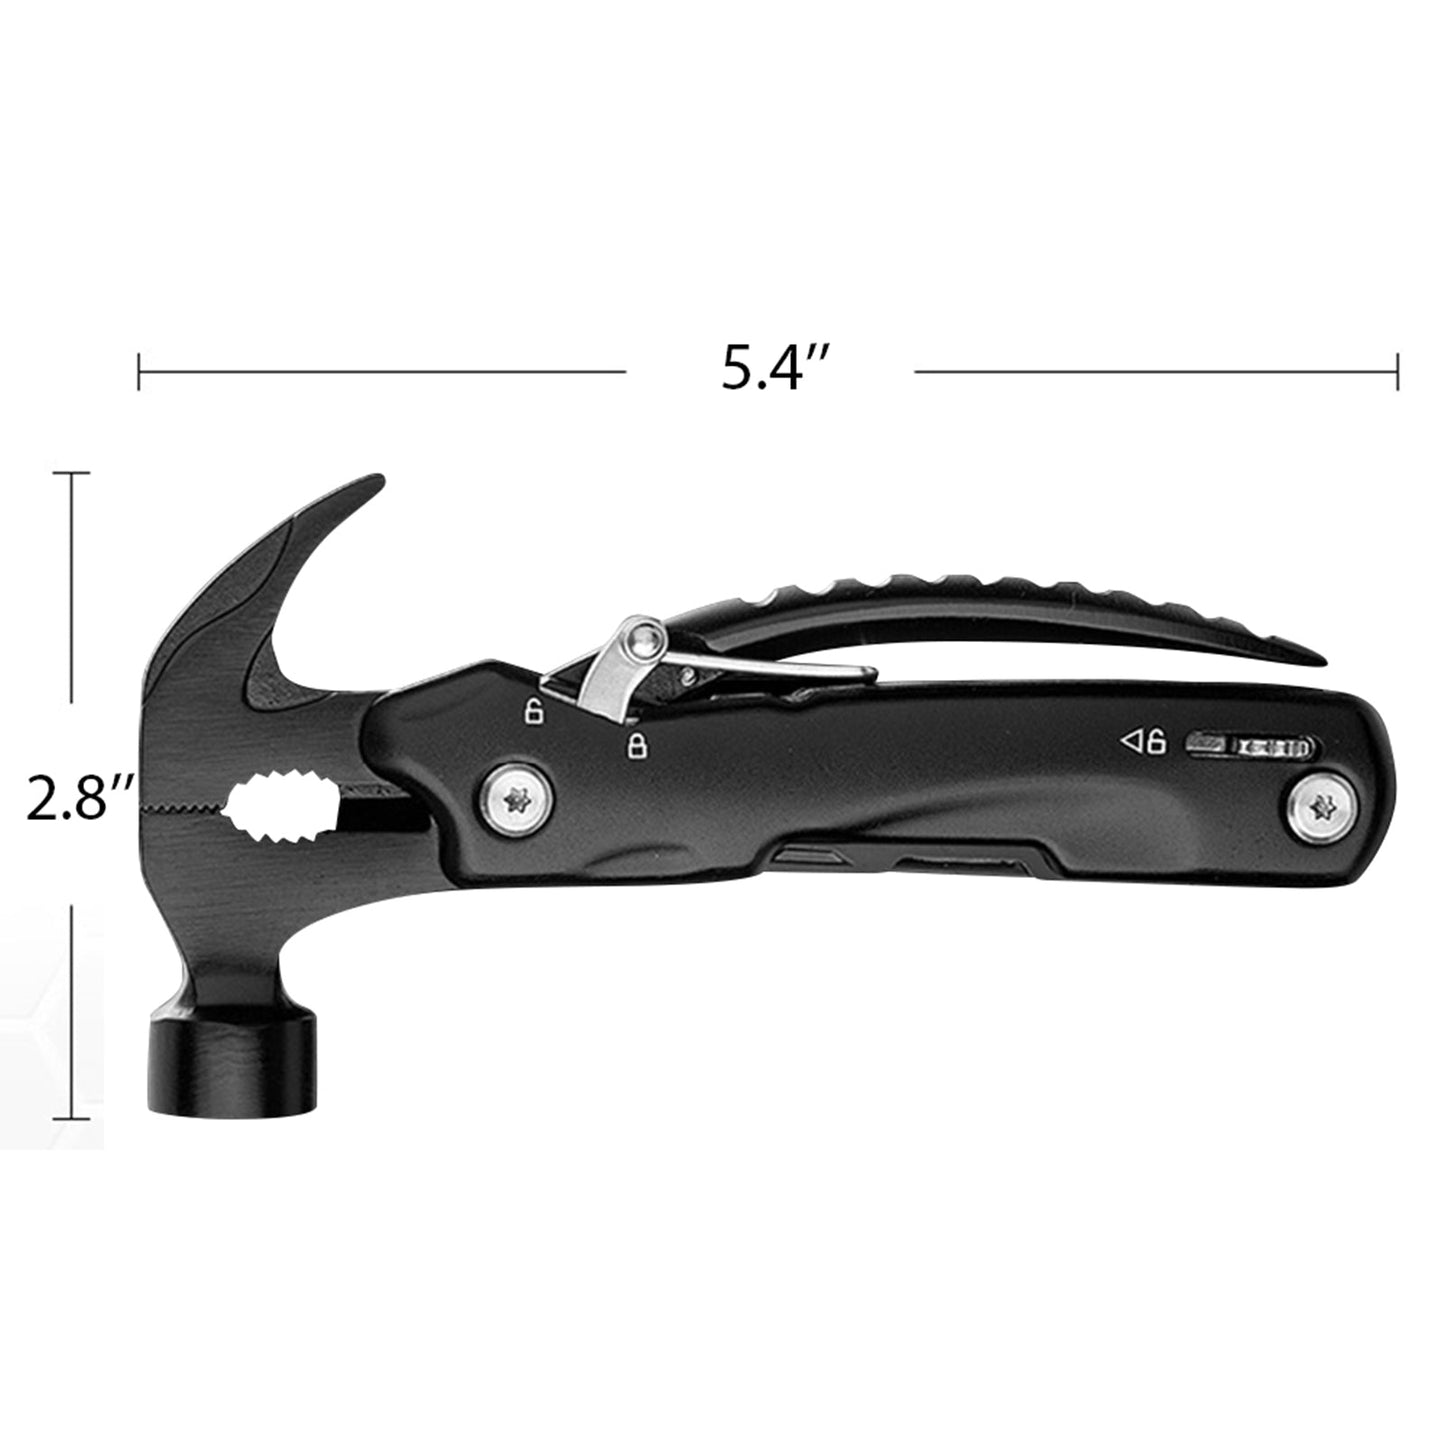 12 in 1 Stainless Steel Multi-tool Hammer